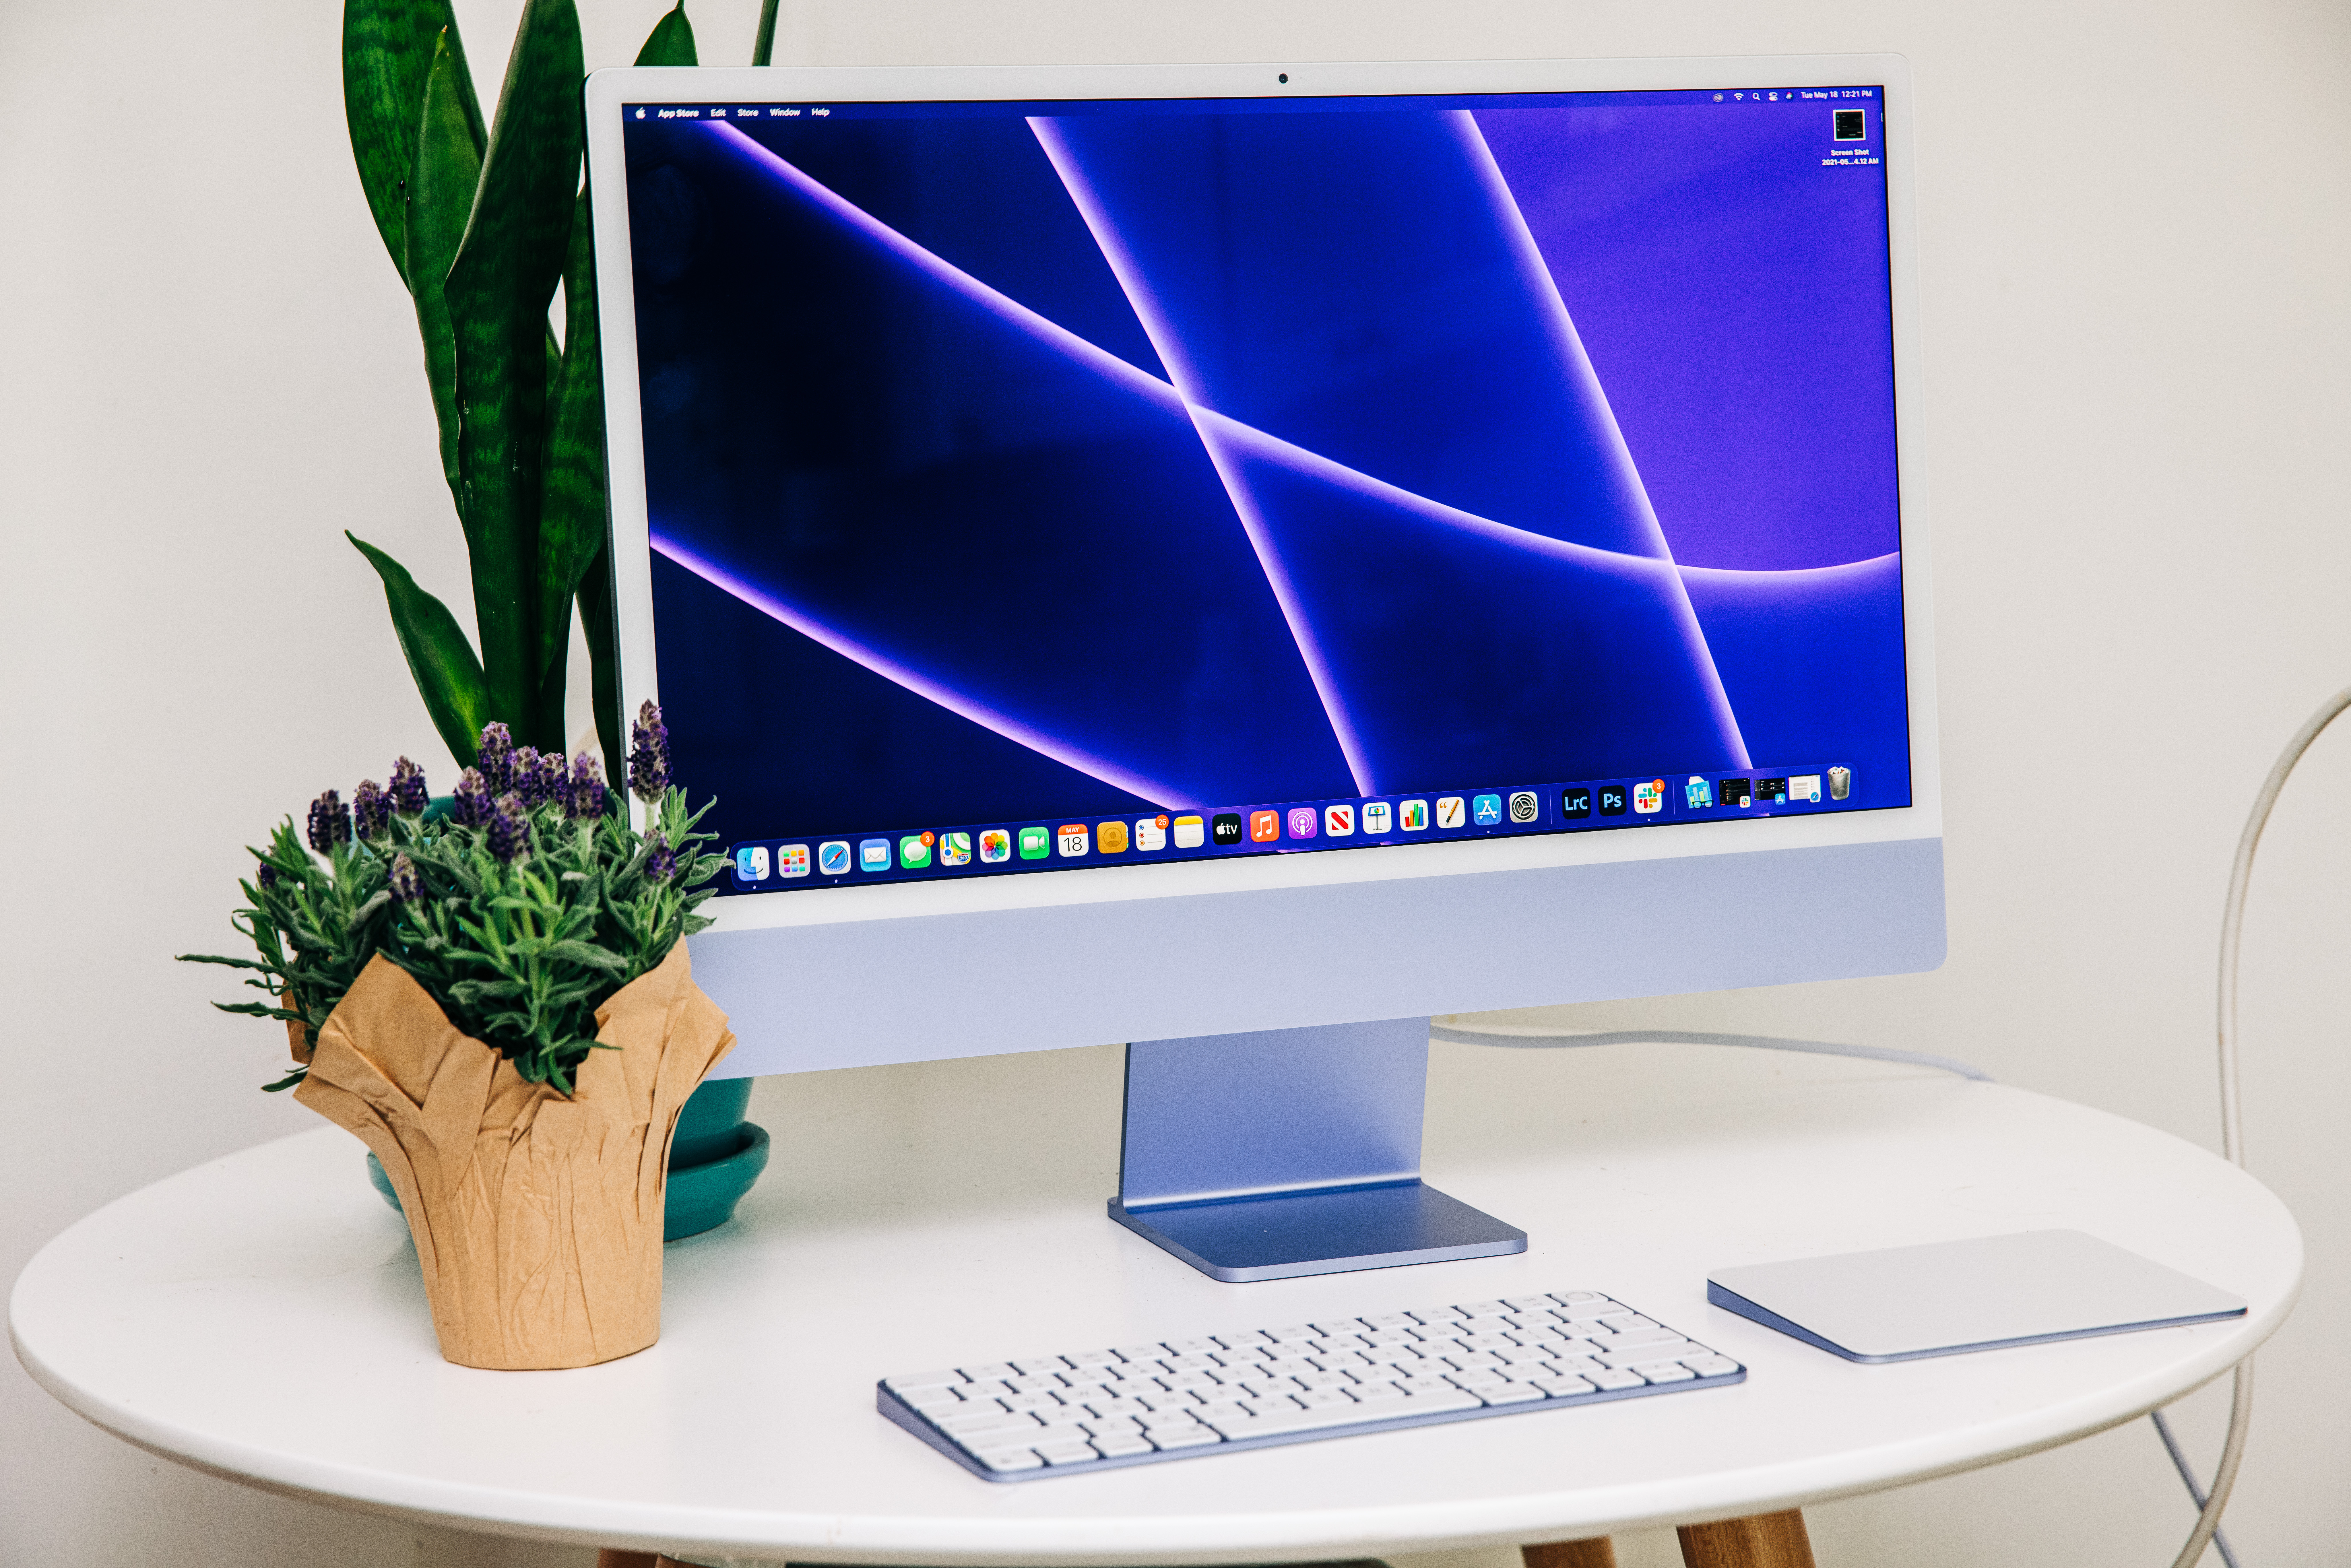 iMac Review: Apple's New Desktop Computer